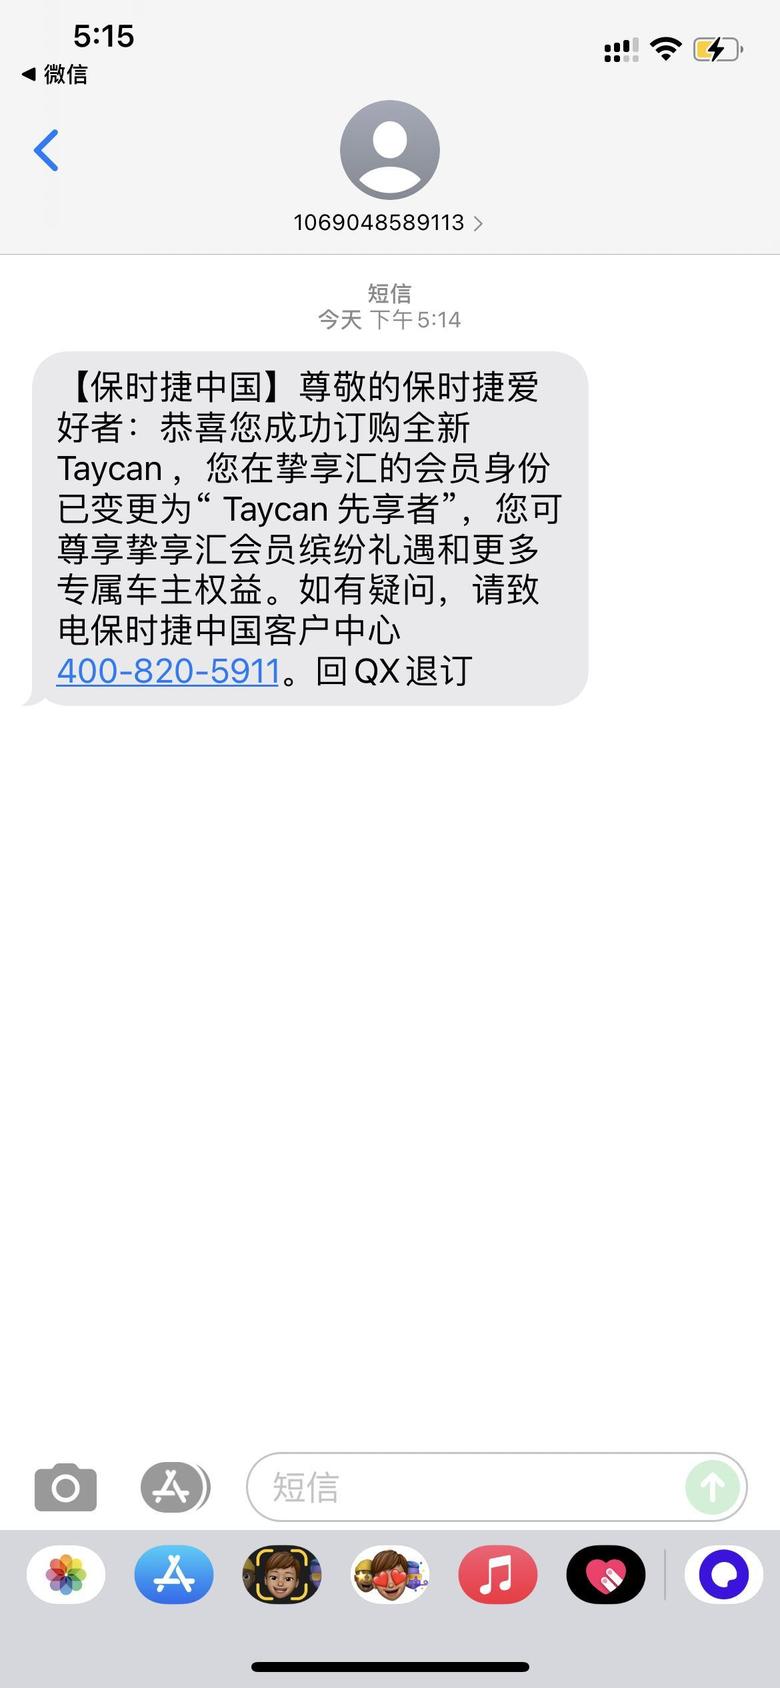 taycan今天收到保时捷发的短信了，是证明车开始生产了吗，大家收到这个短信后都是多久到车的？